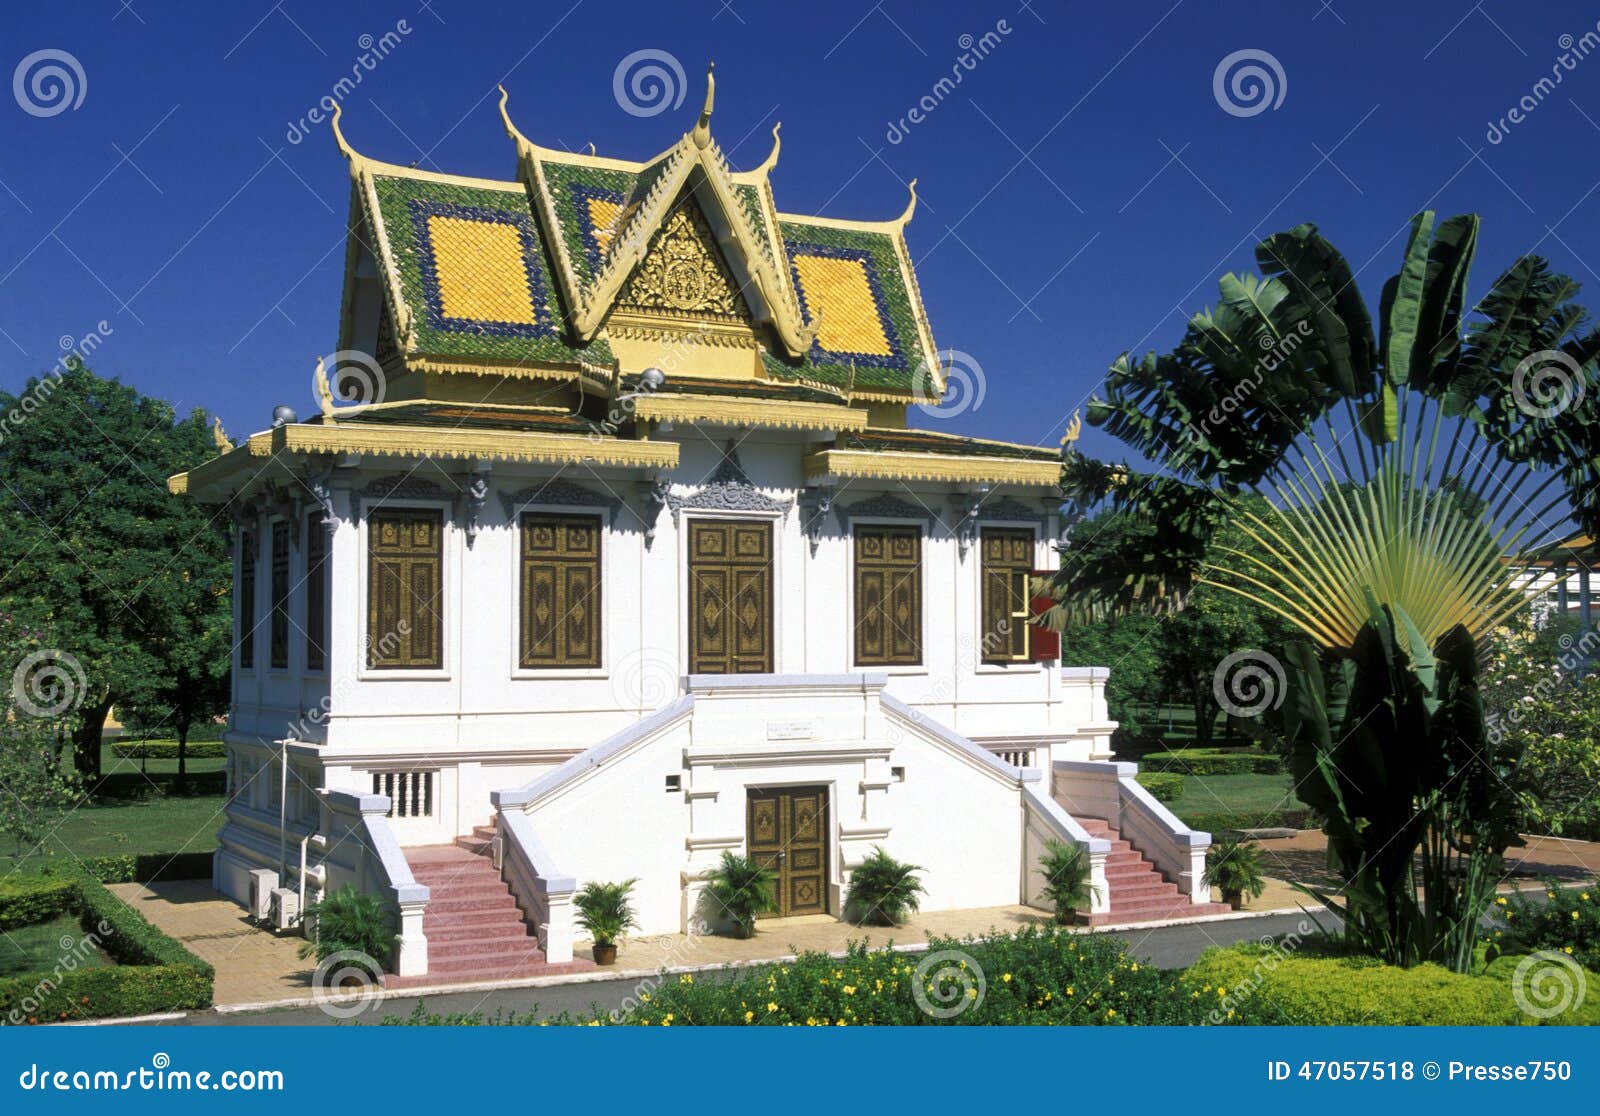 KAMBODJA PHNOM PENH. Het koningspaleis in de stad van phnom penh in Kambodja in Zuidoost-Azië